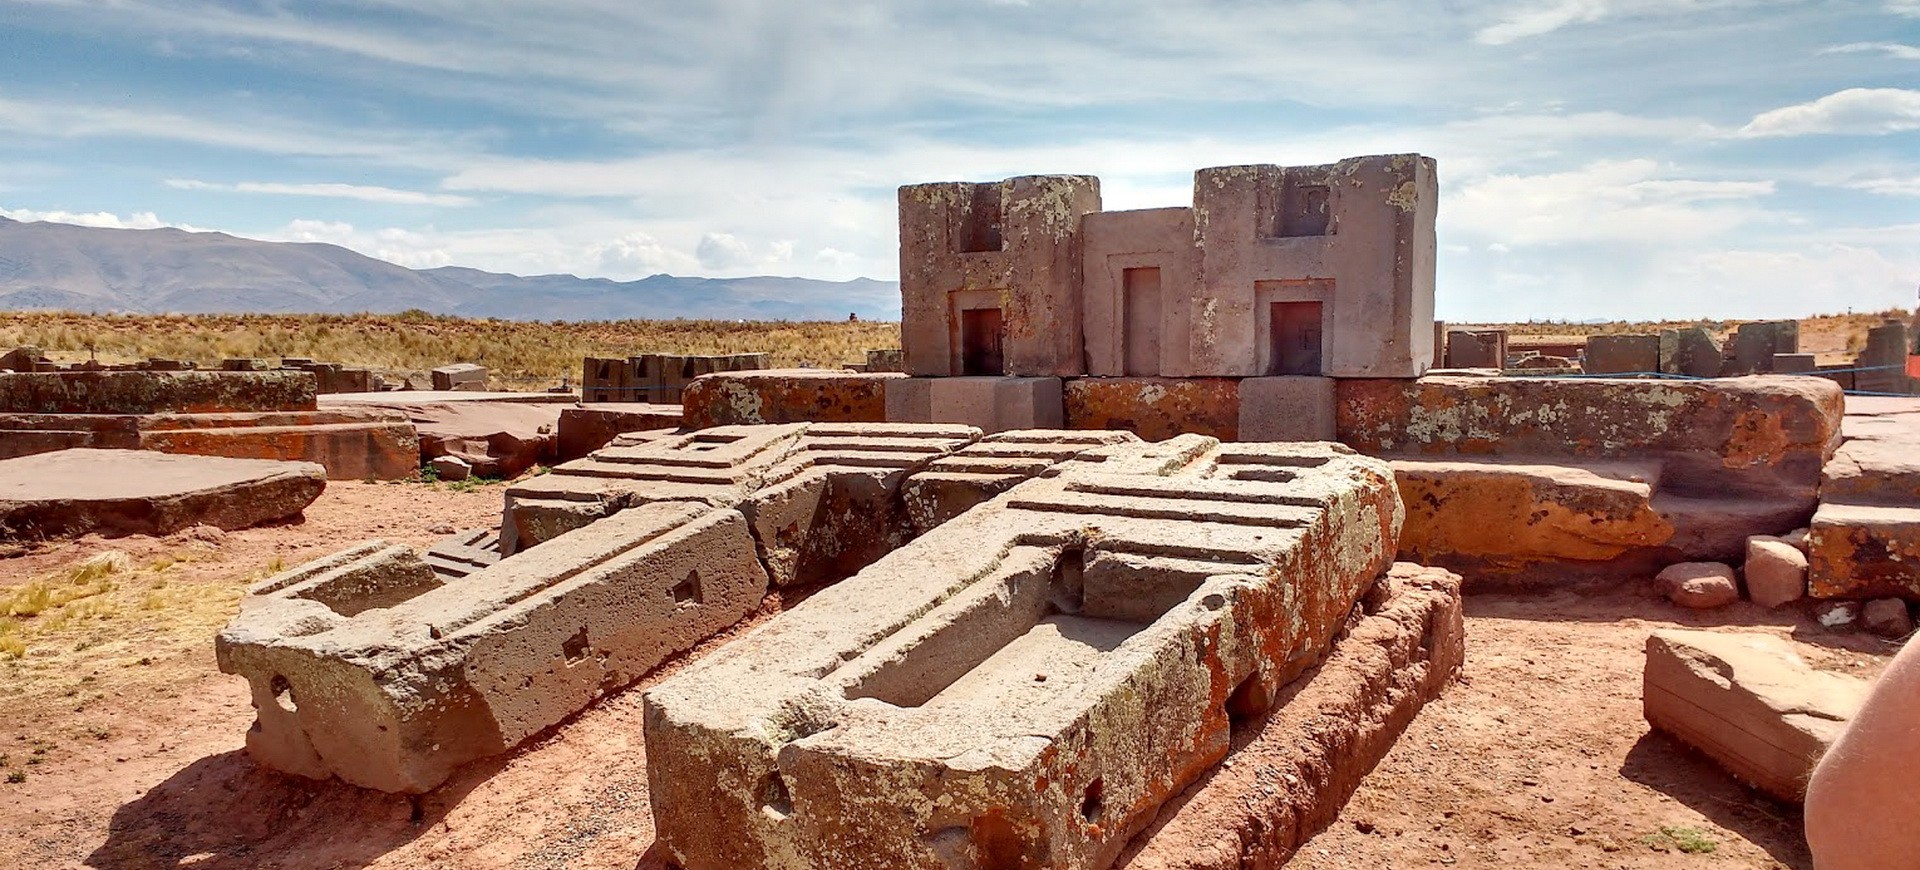 Bolivie Tiwanaku site archéologique